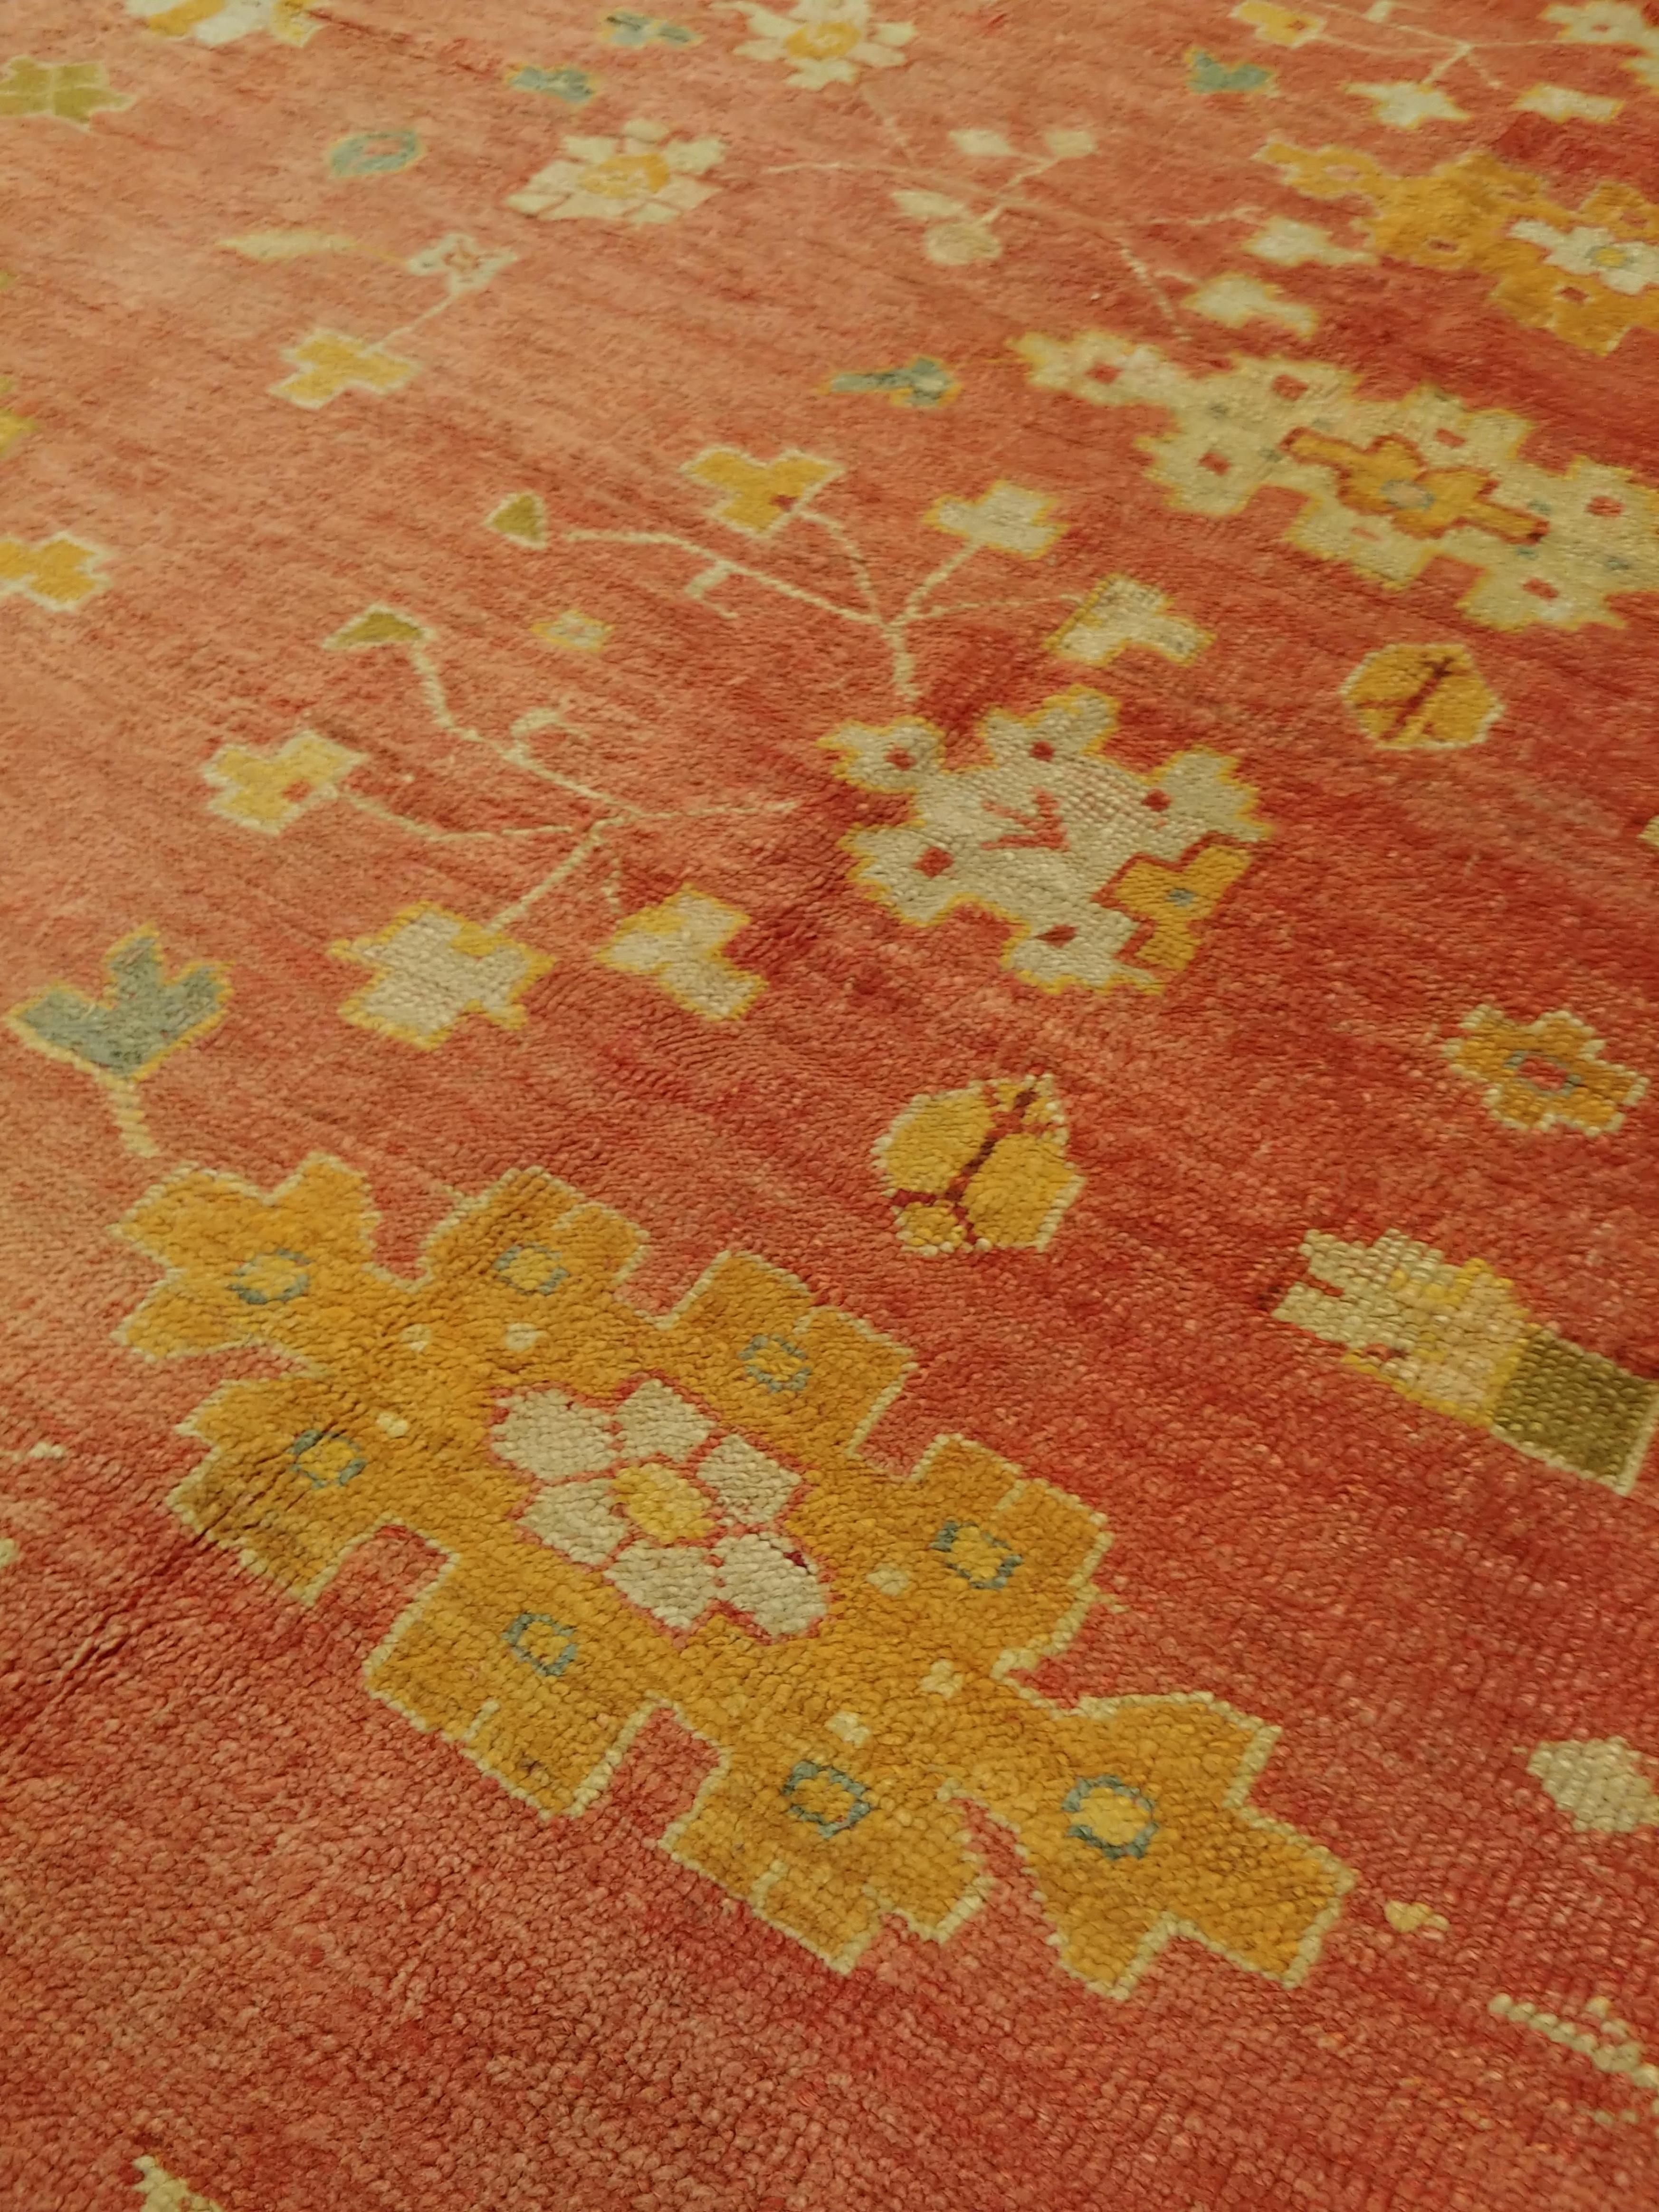 Wool Antique Oushak Carpet, Handmade Turkish Oriental Rug, Beige, Coral, Light Blue For Sale